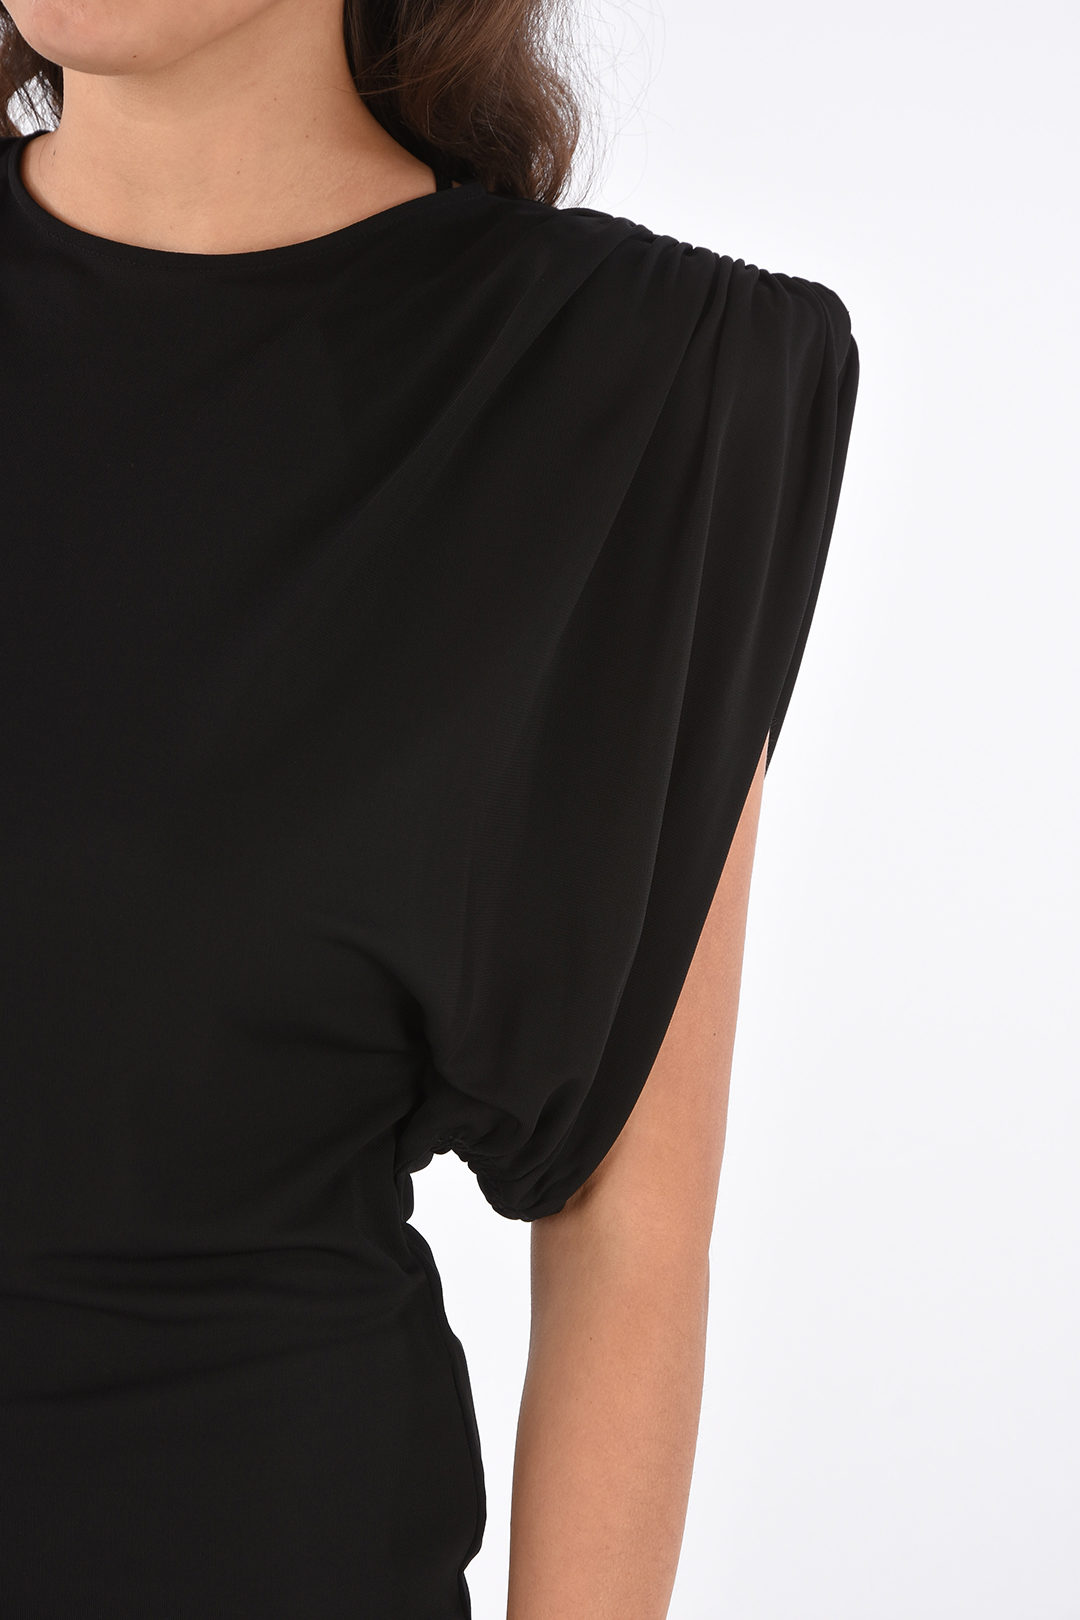 Versace drop shoulder sleeve top women - Glamood Outlet